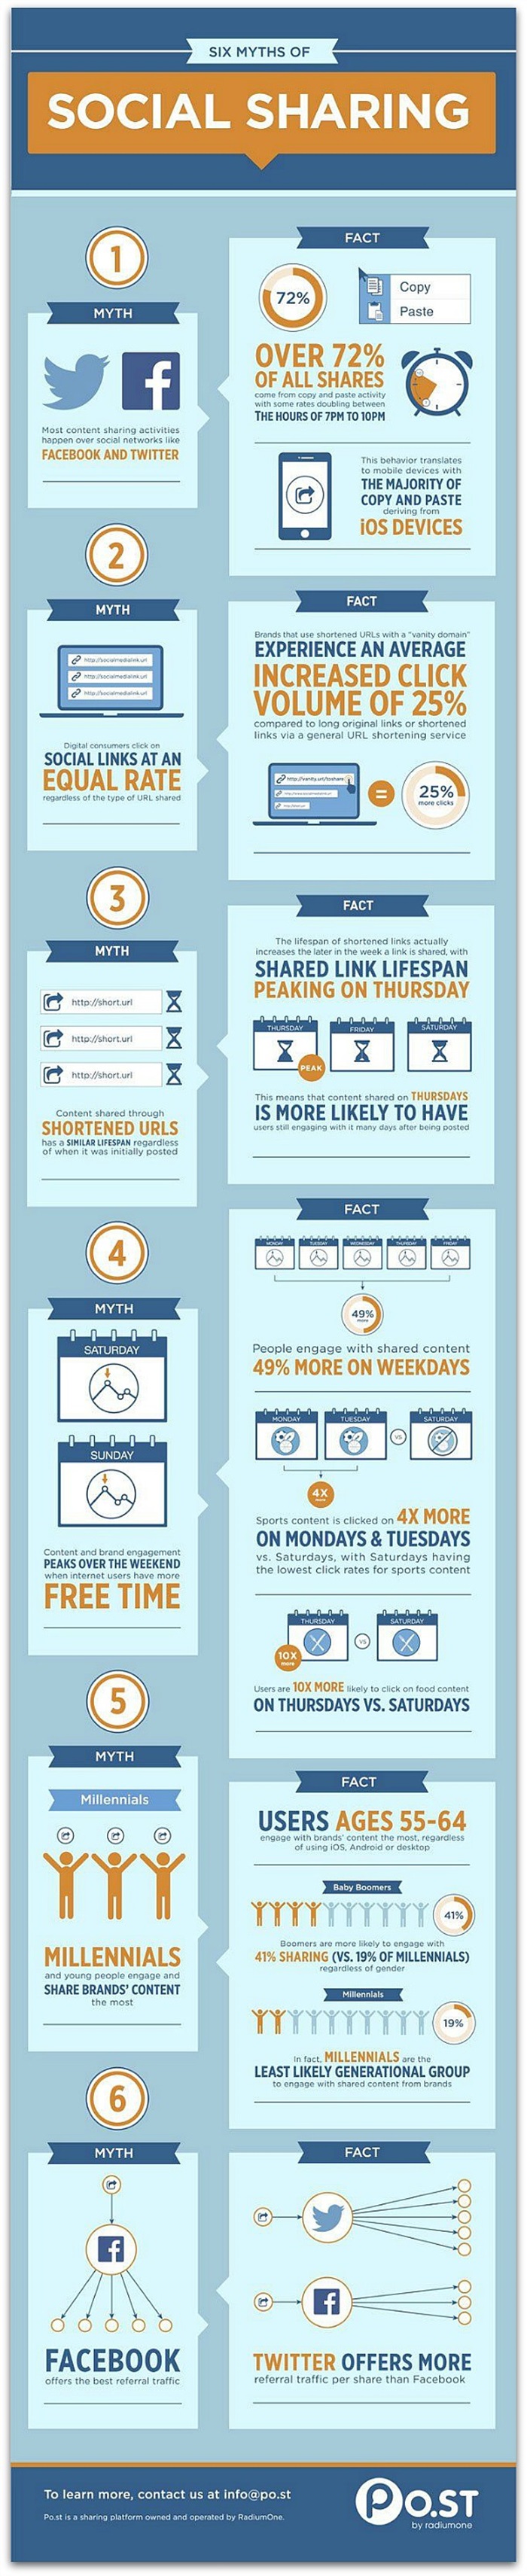 Social_Sharing_Myths_Infographic